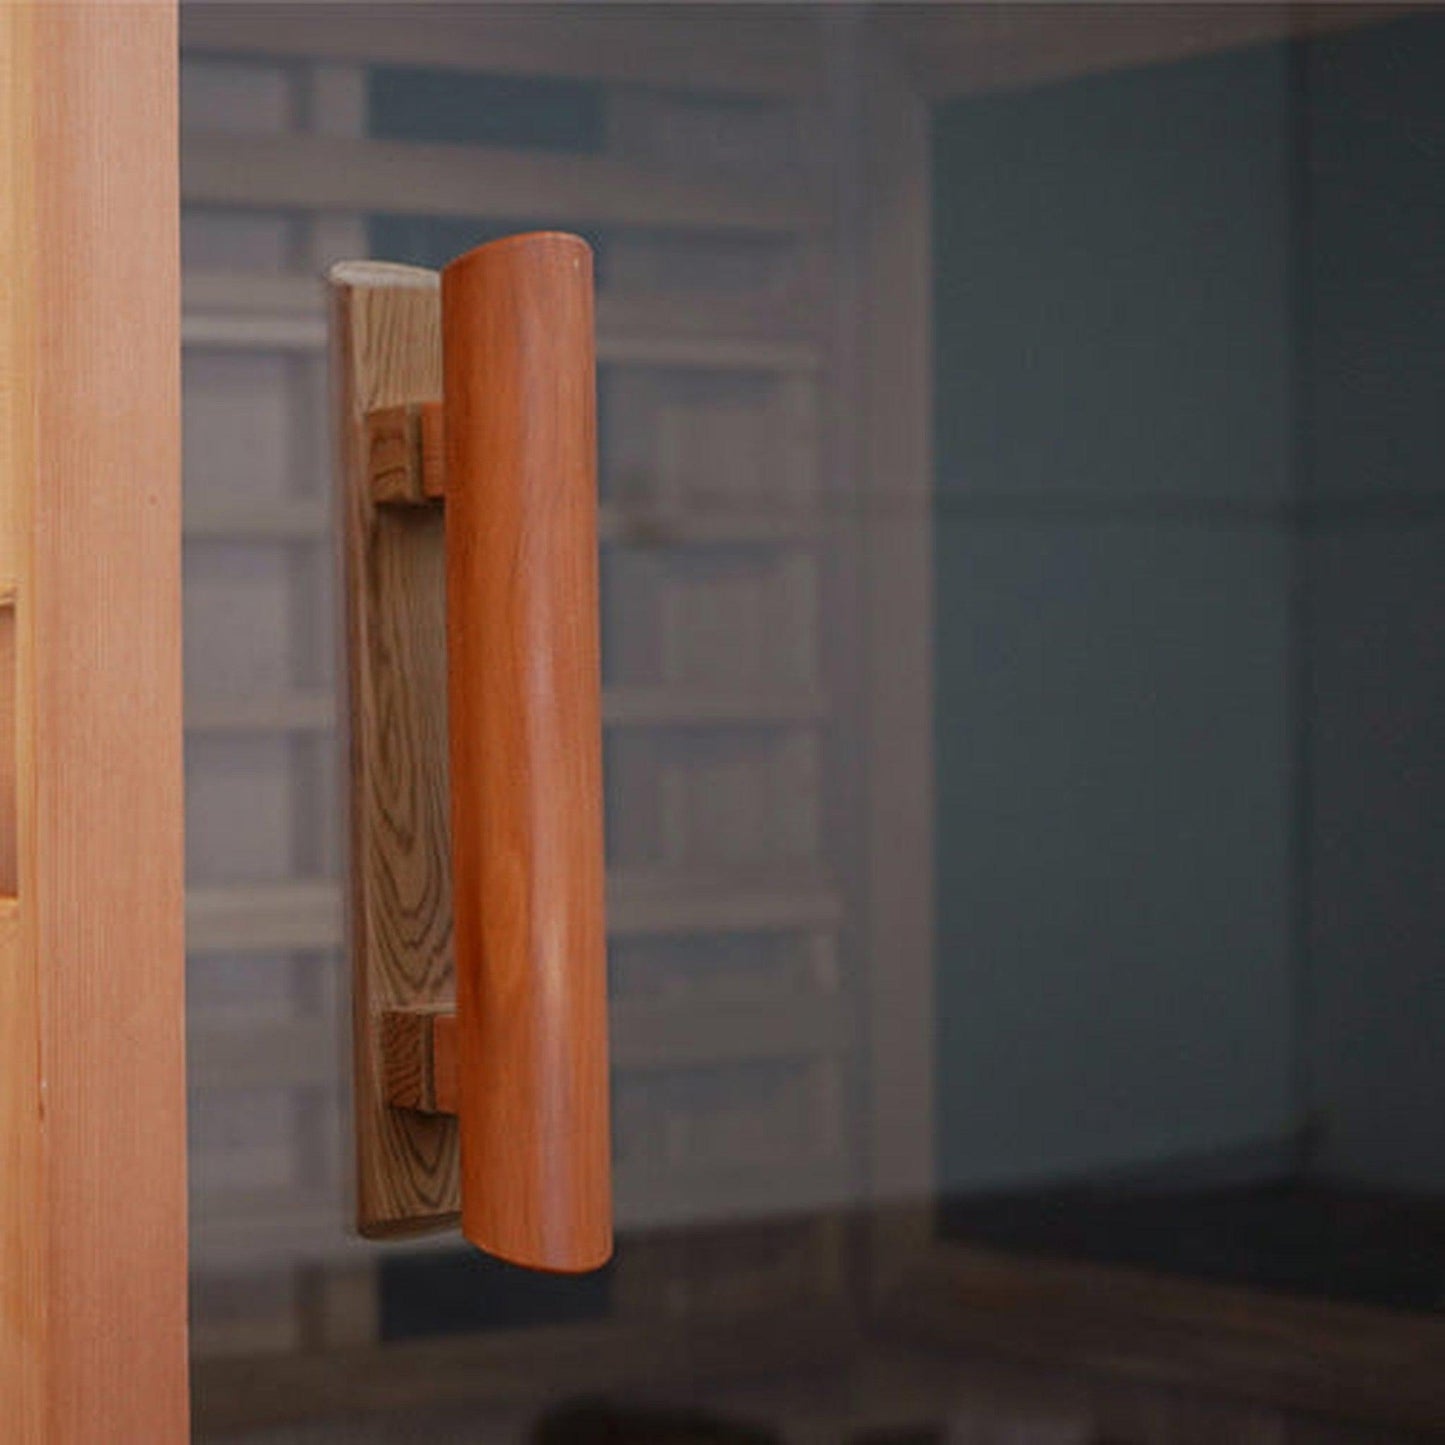 Finnmark Designs FD-2 Hybrid 2.0 Full Spectrum 48" 2-Person Home Infrared Sauna